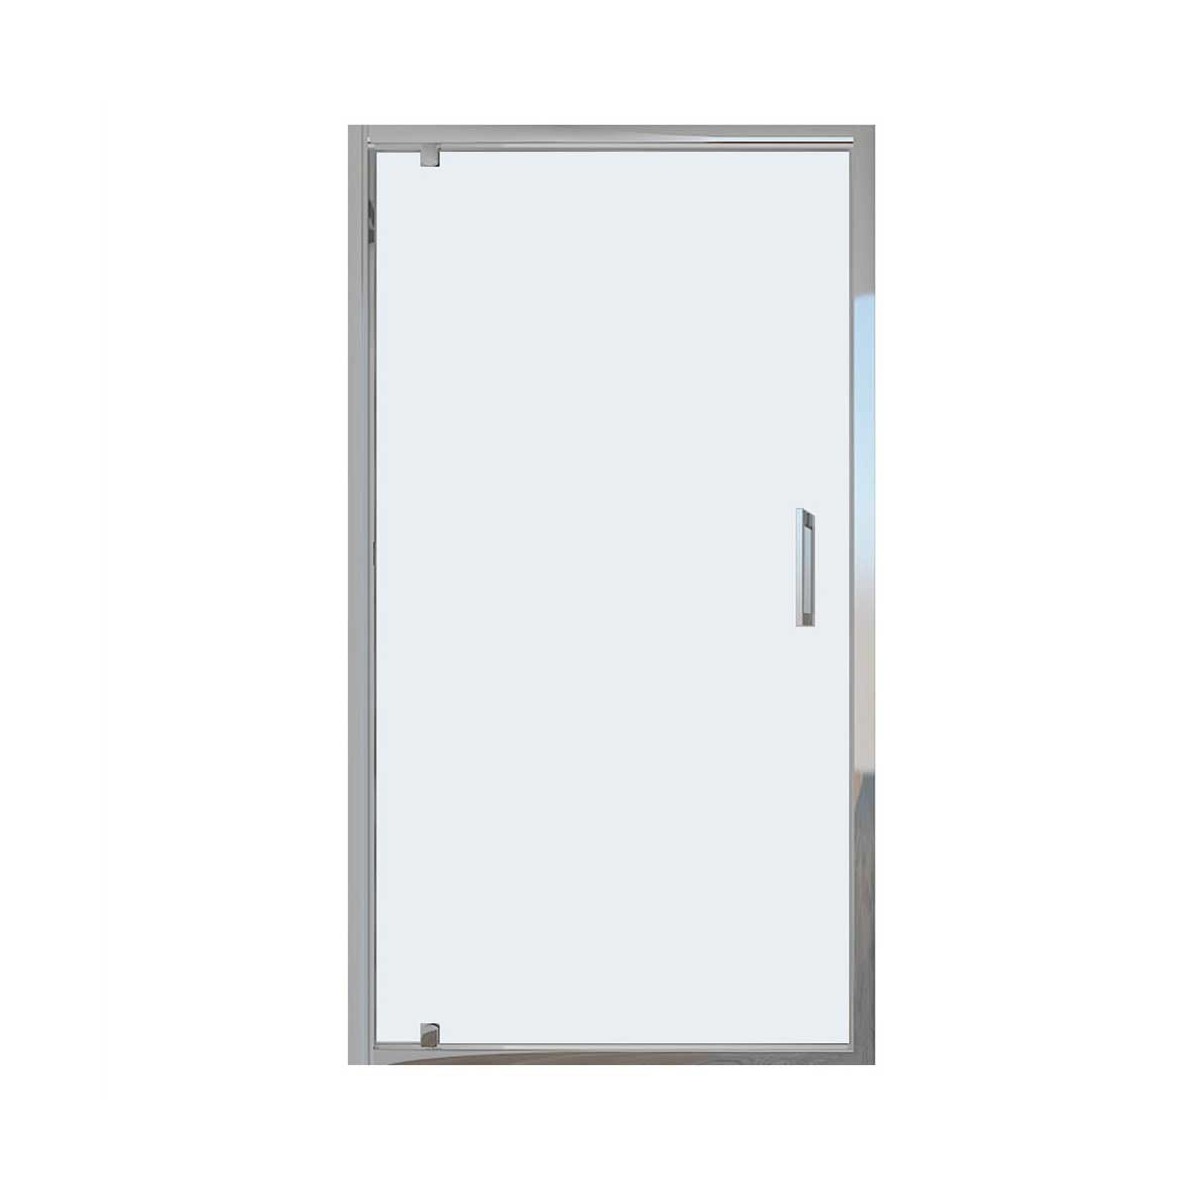 Porta Doccia Battente interna/esterna OPALE vetro trasparente - h190